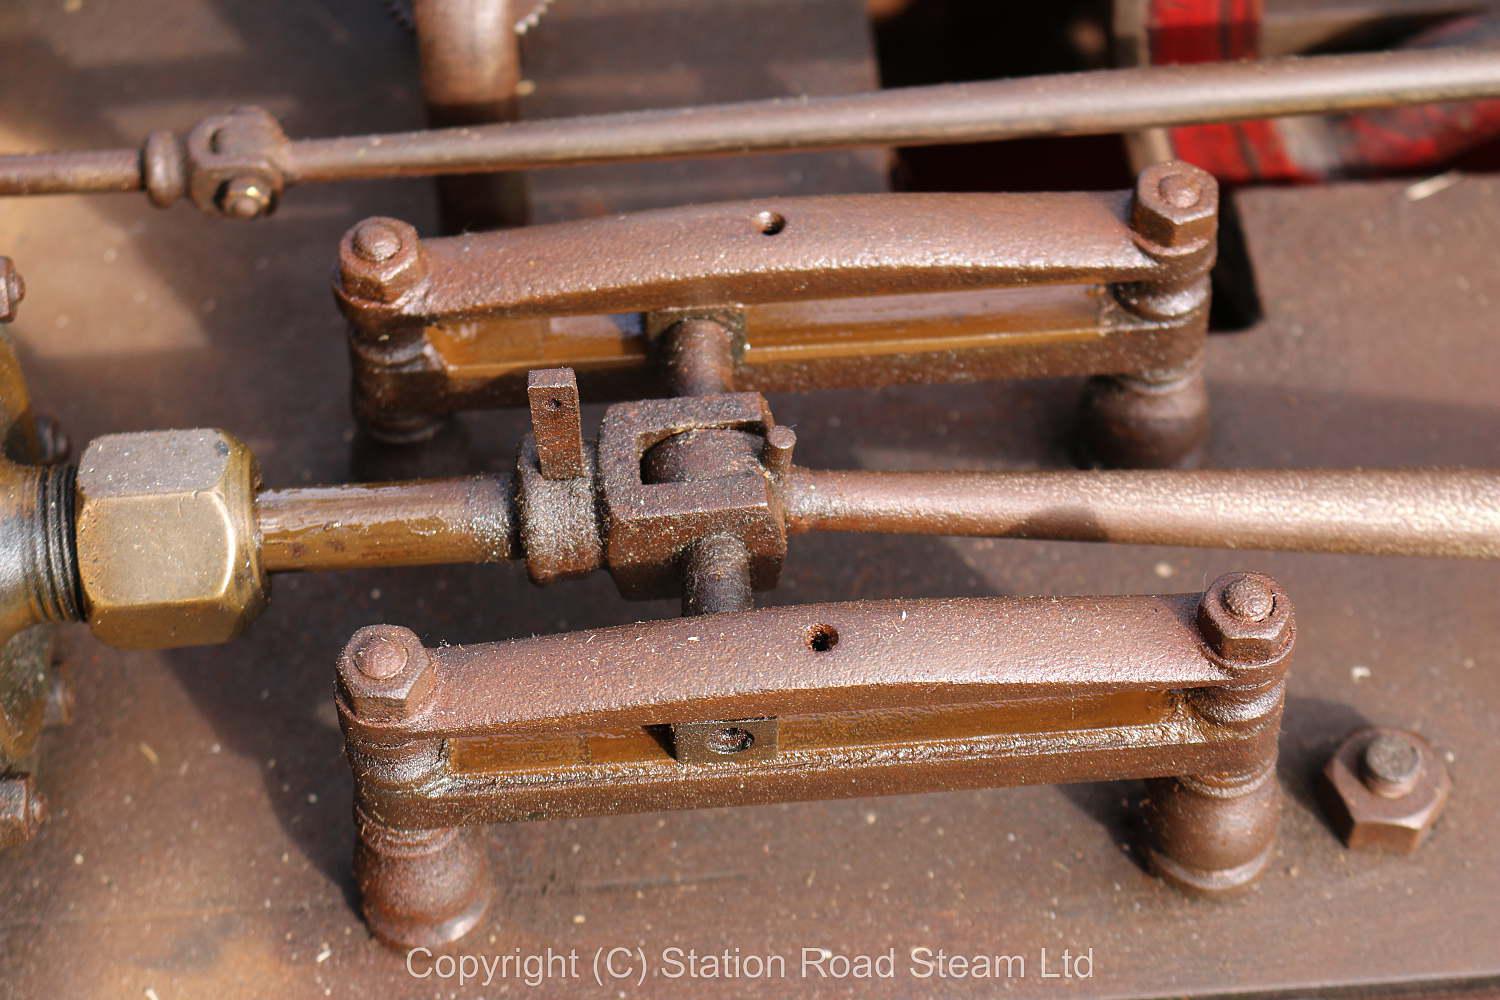 Antique twin cylinder horizontal engine